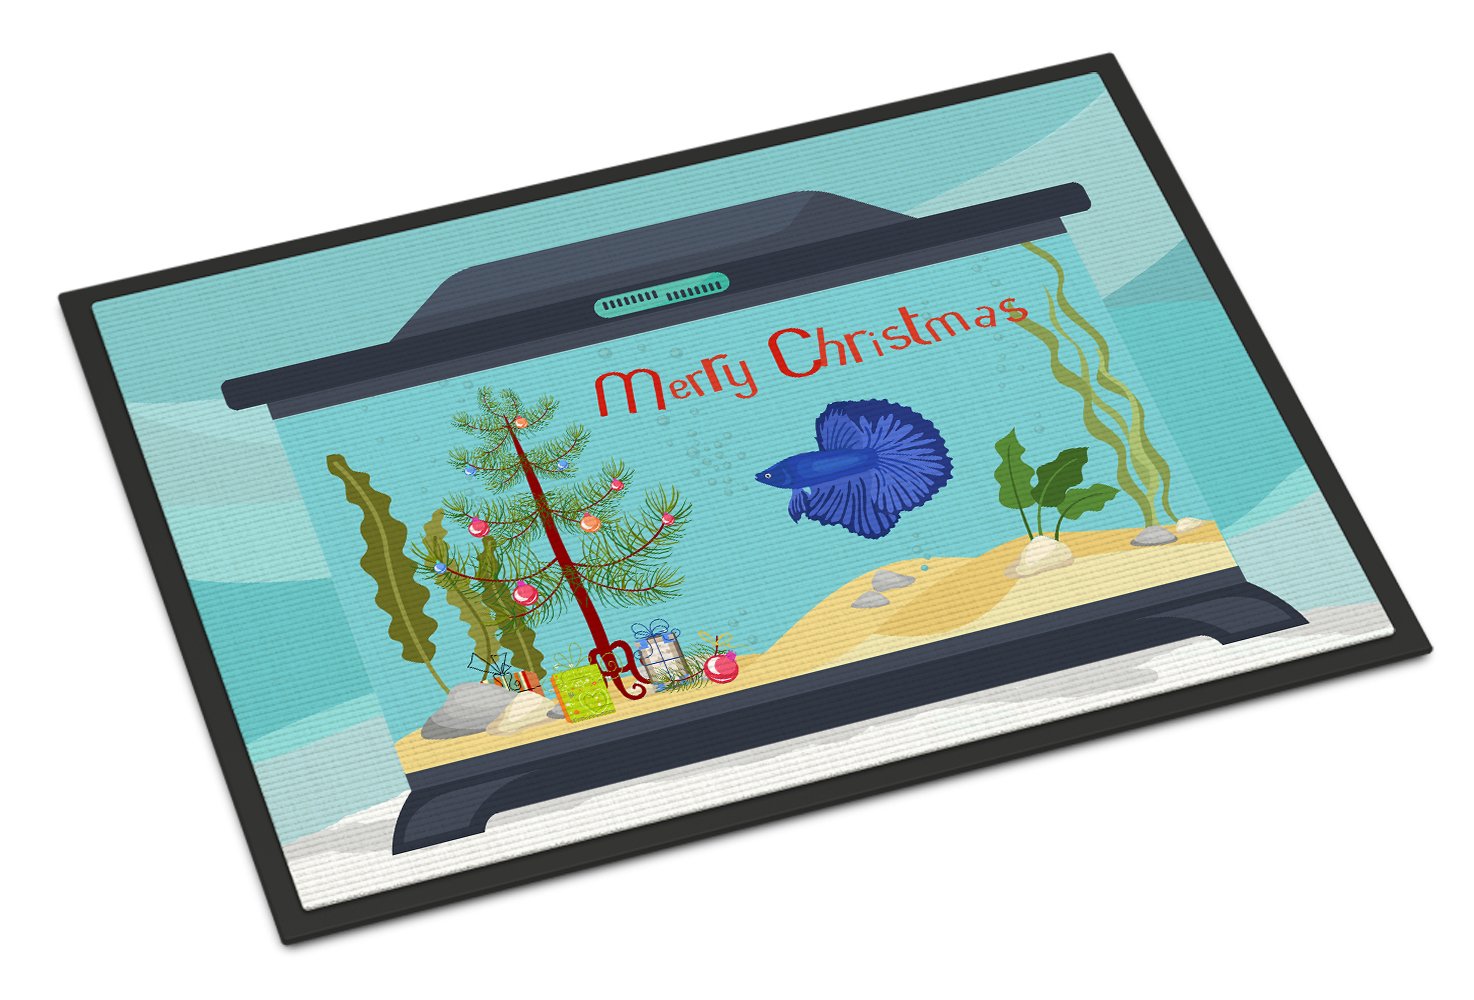 Delta Tail Betta Fish Merry Christmas Indoor or Outdoor Mat 24x36 CK4507JMAT by Caroline's Treasures